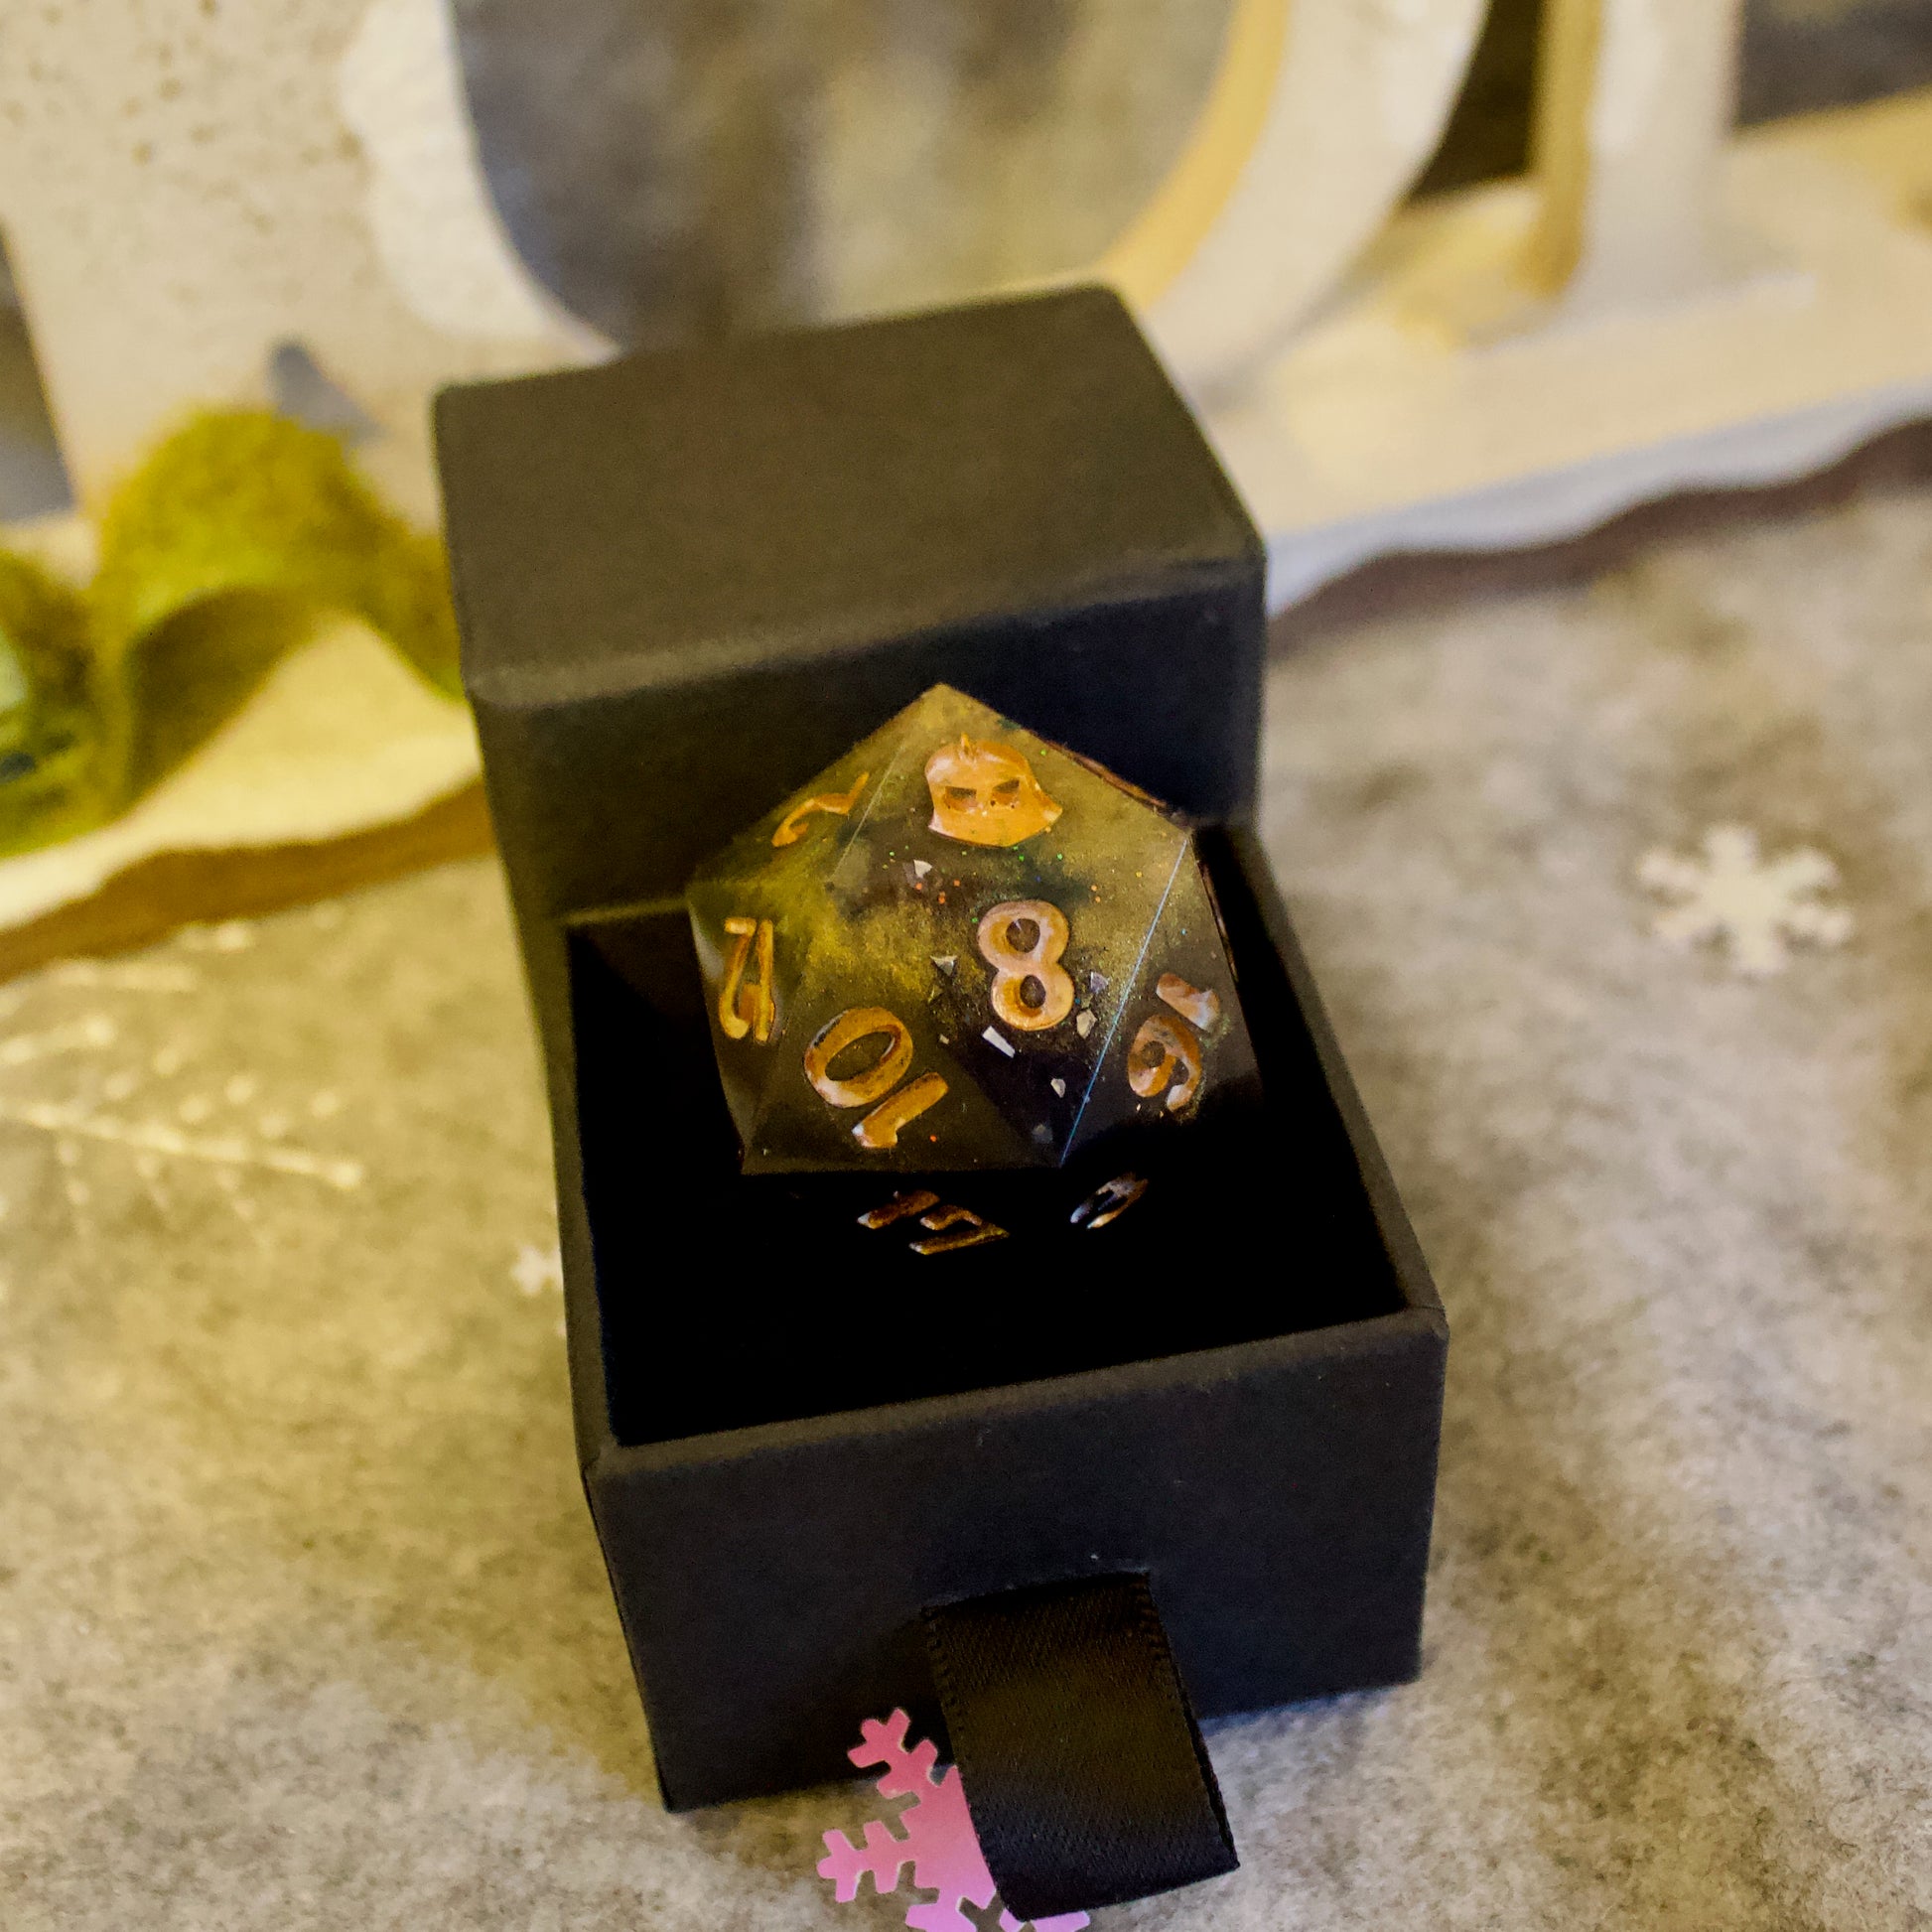 Handmade D20, handmade dnd dice sets, handmade RPG d20, dnd dice for dice goblin and critical critters